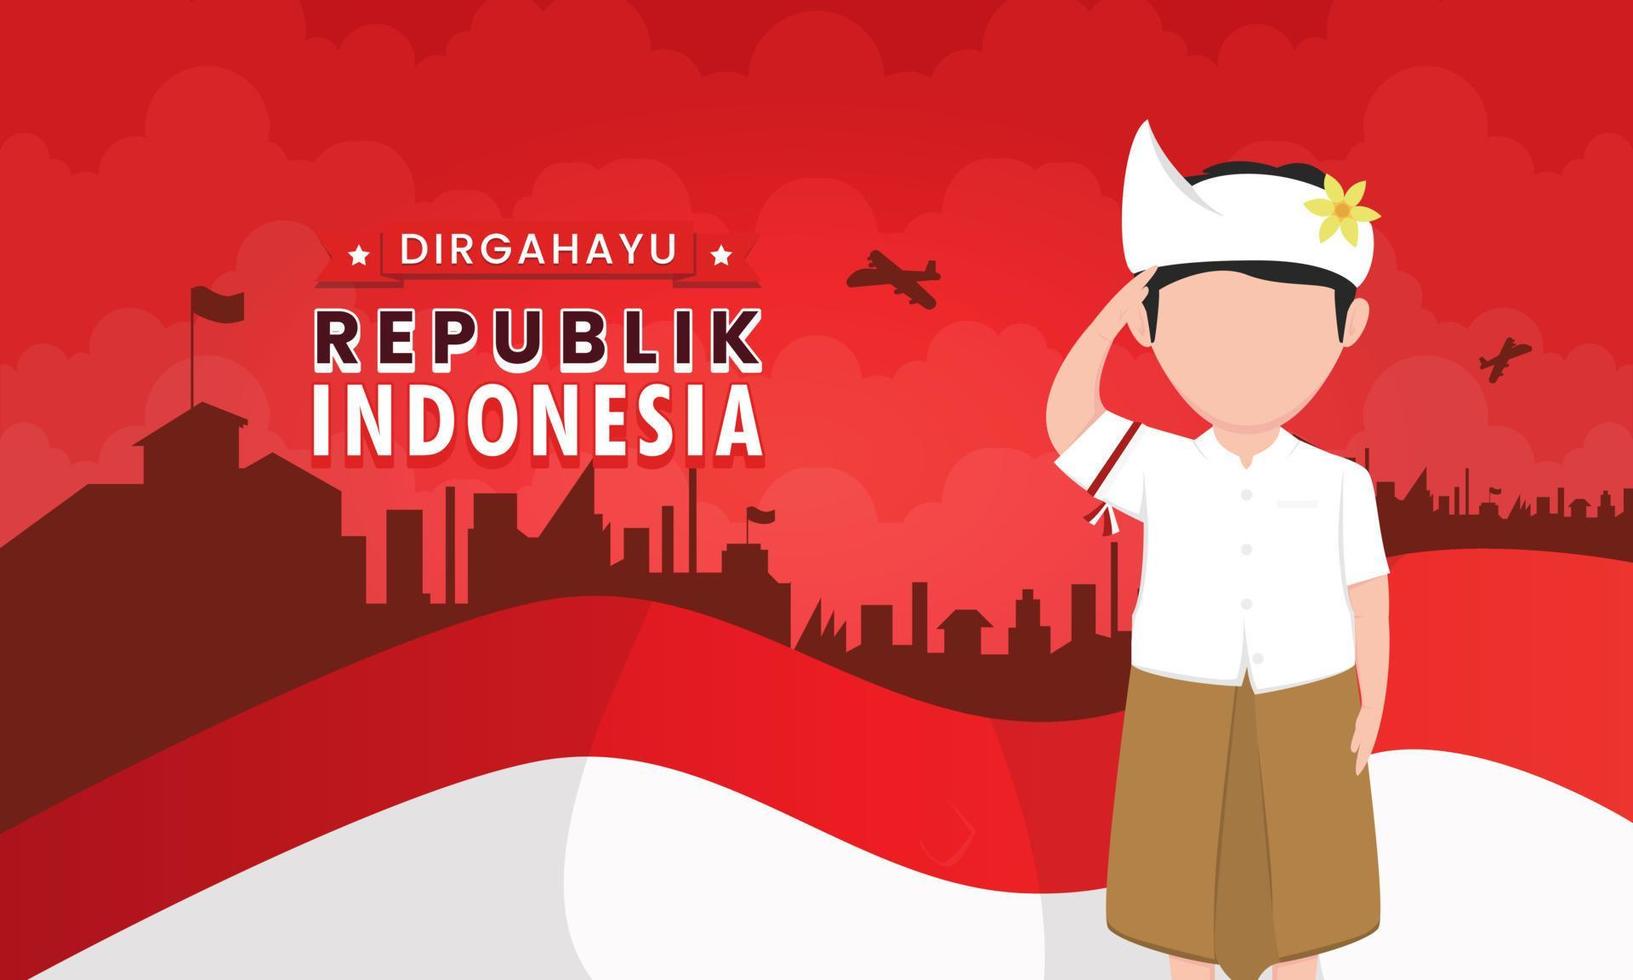 dirgahayu republik indonesia banner vector